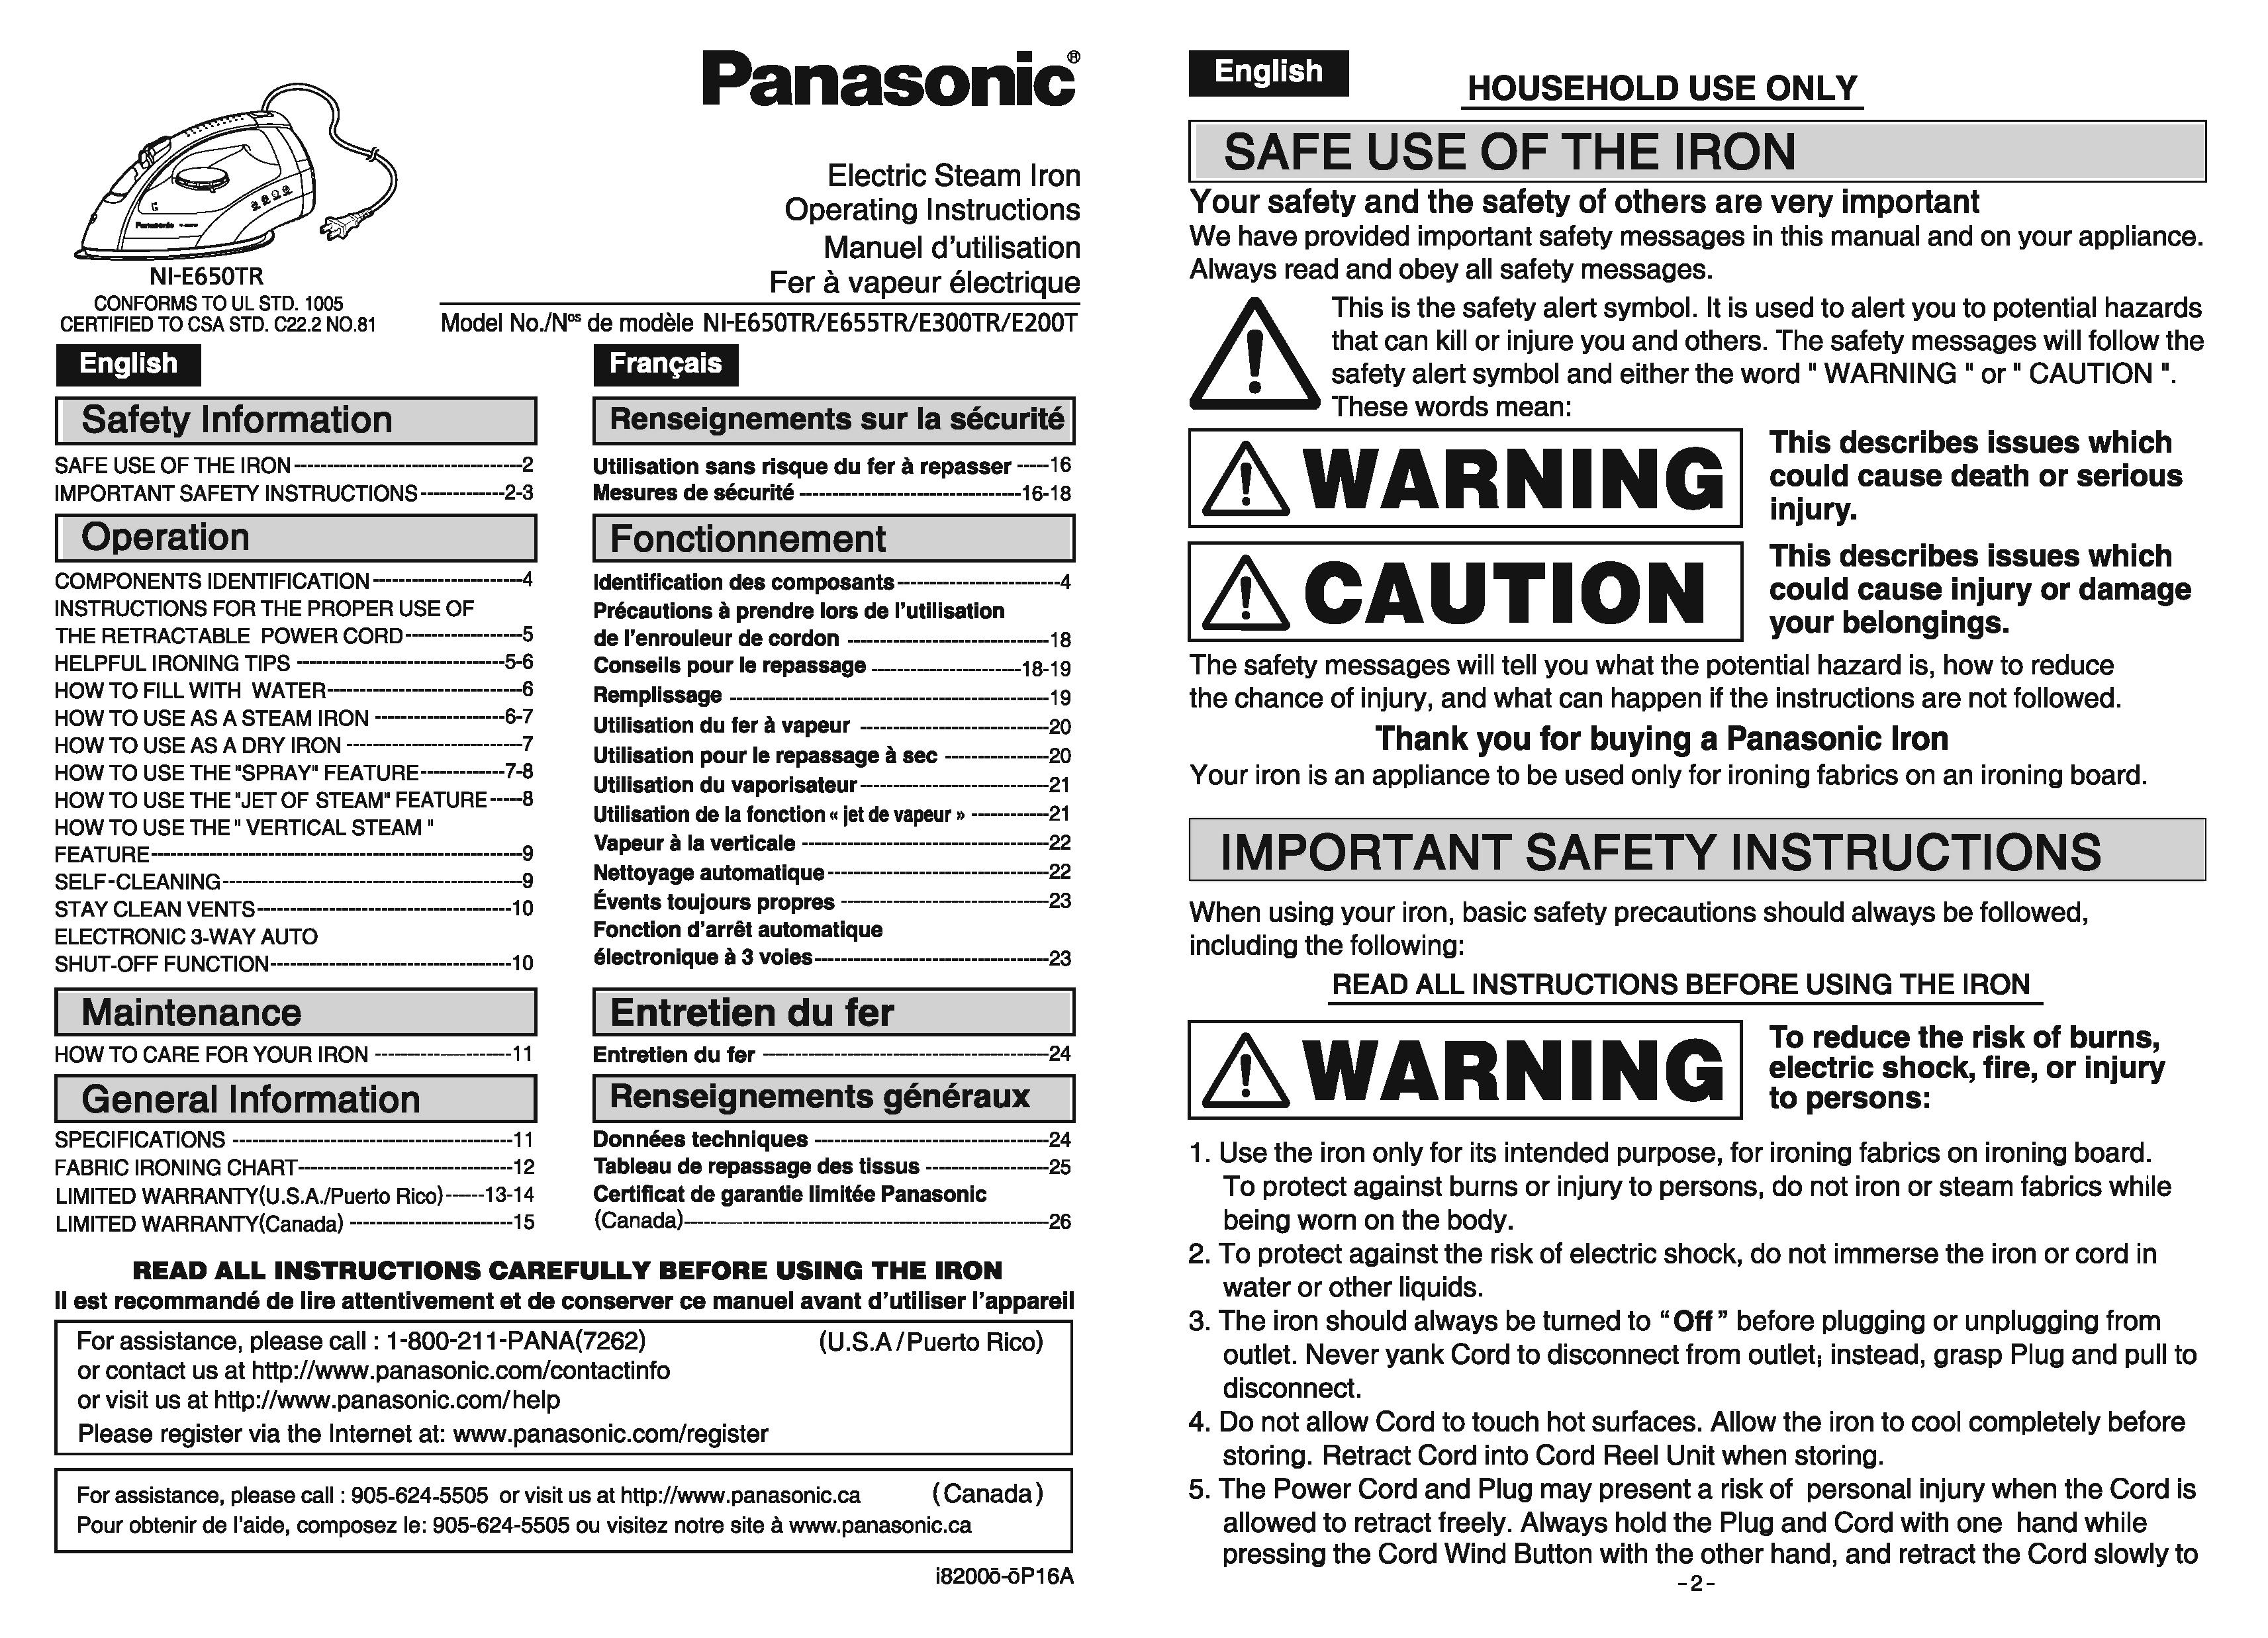 Panasonic NI-E300TR Iron User Manual